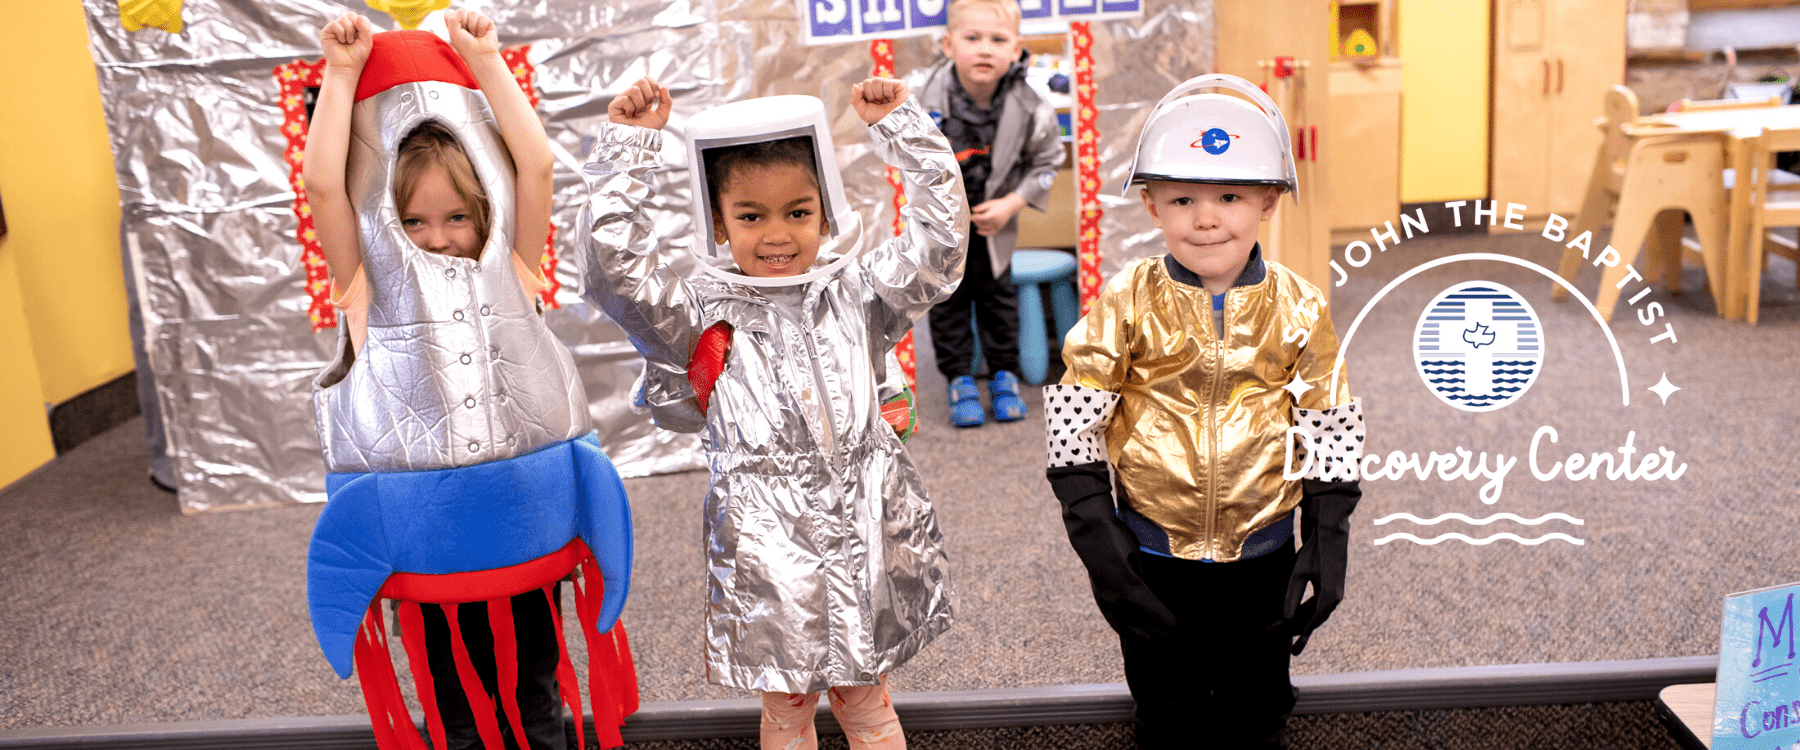 three preschoolers dressed in costume